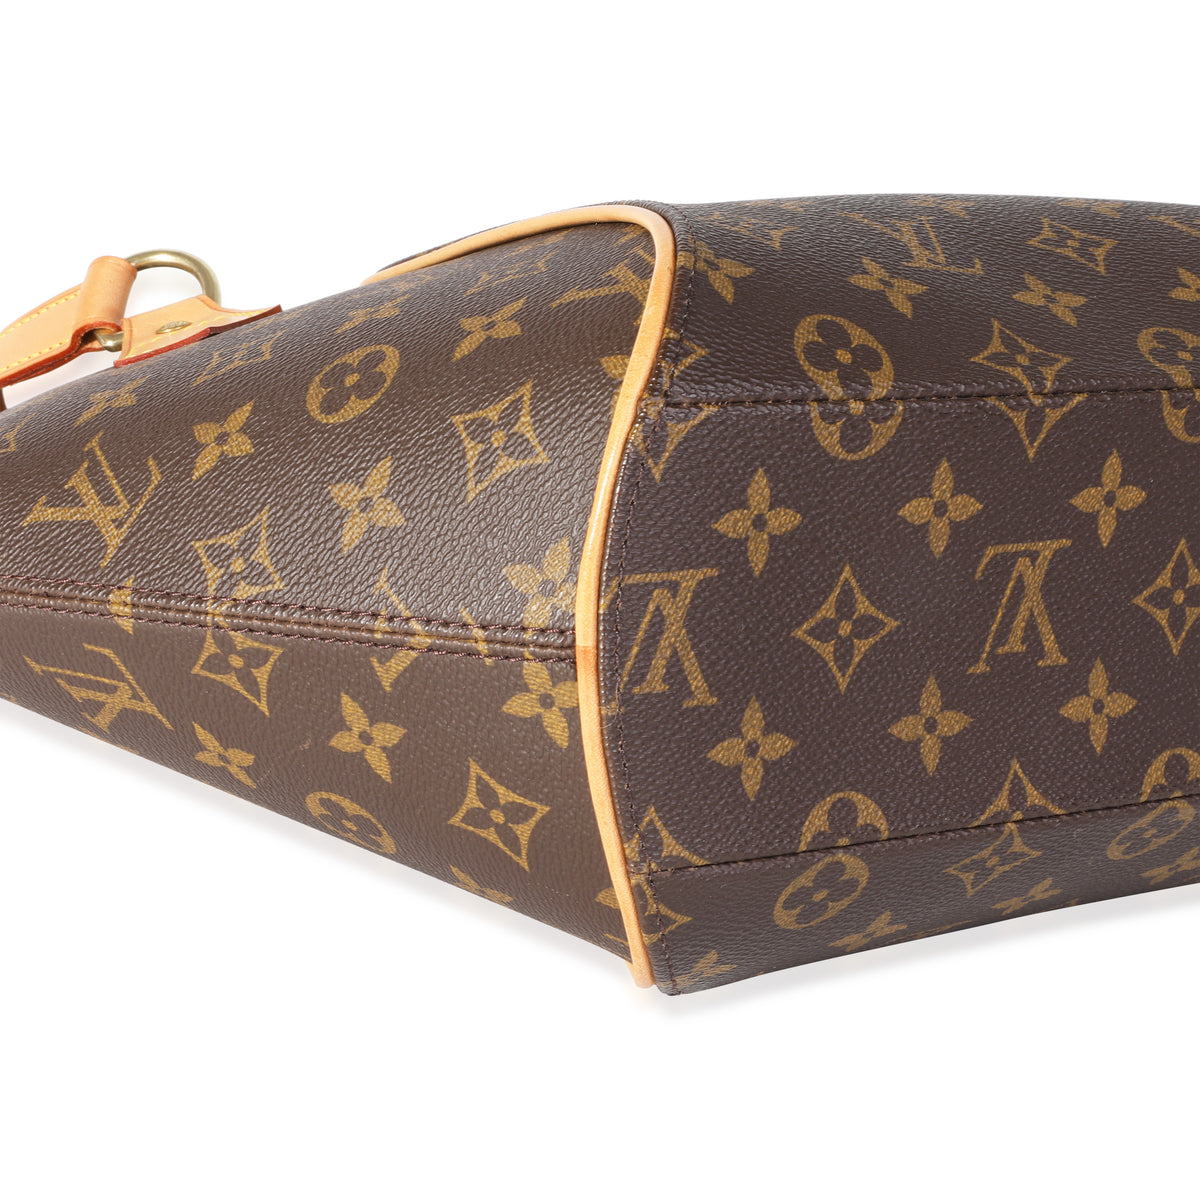 Buy Ellipse Louis Vuitton Bag Online In India -  India